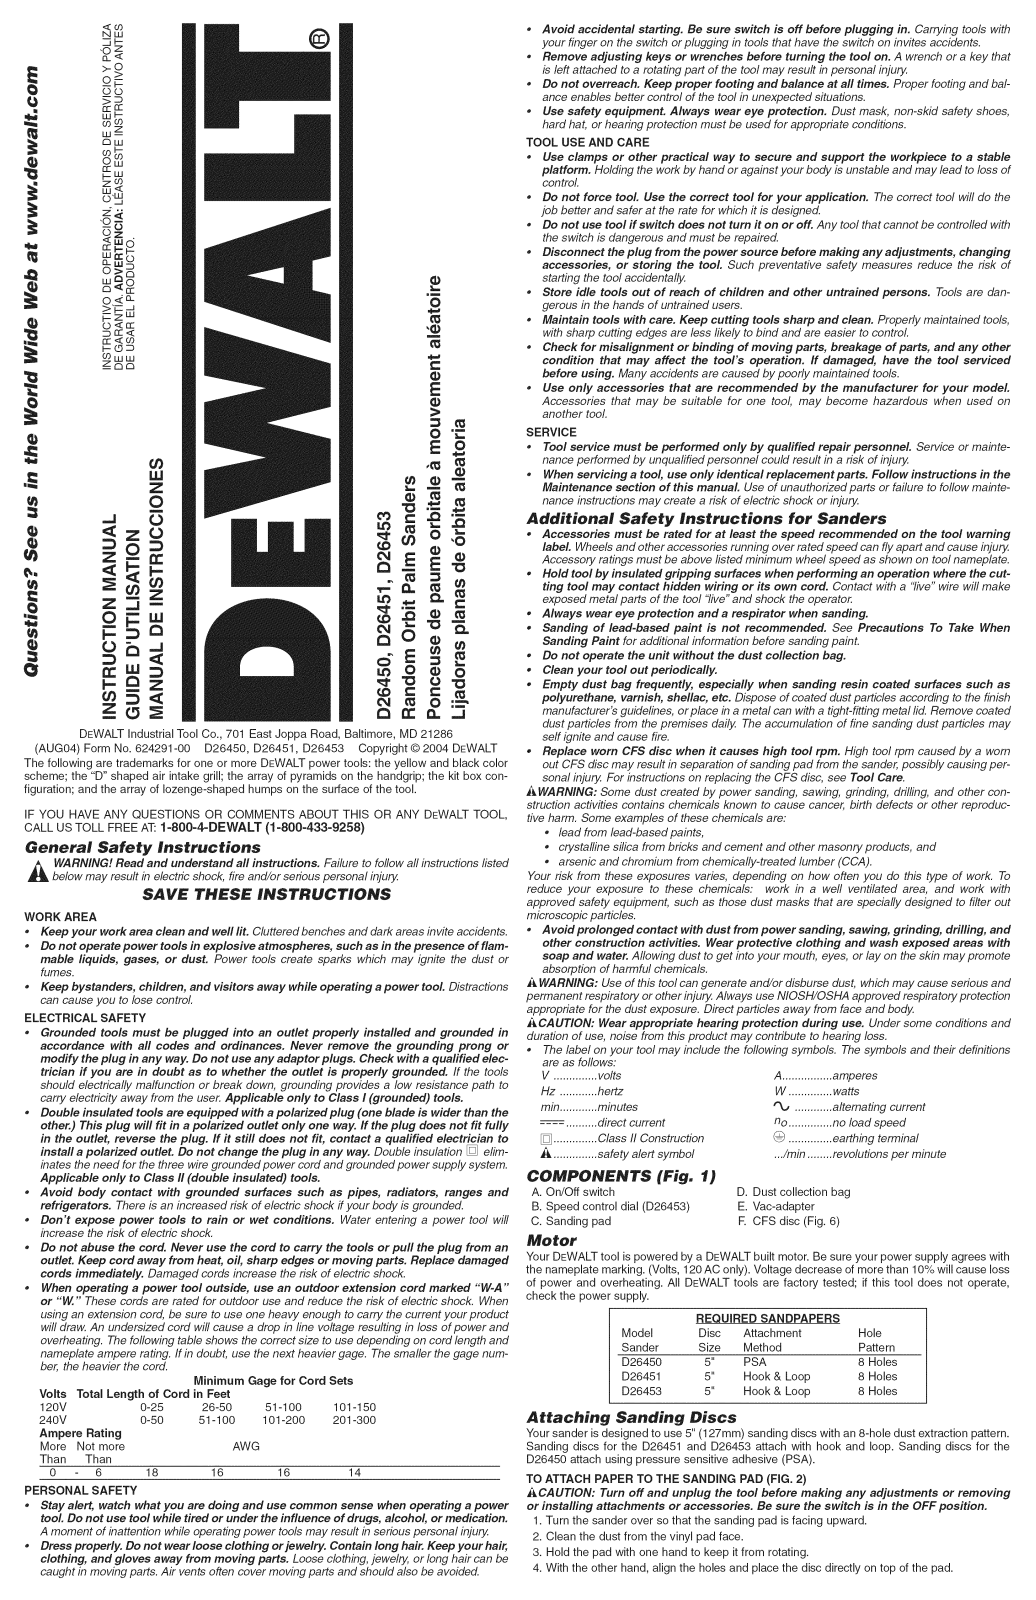 DeWalt D26453 TYPE 1, D26451 TYPE 1 Owner’s Manual